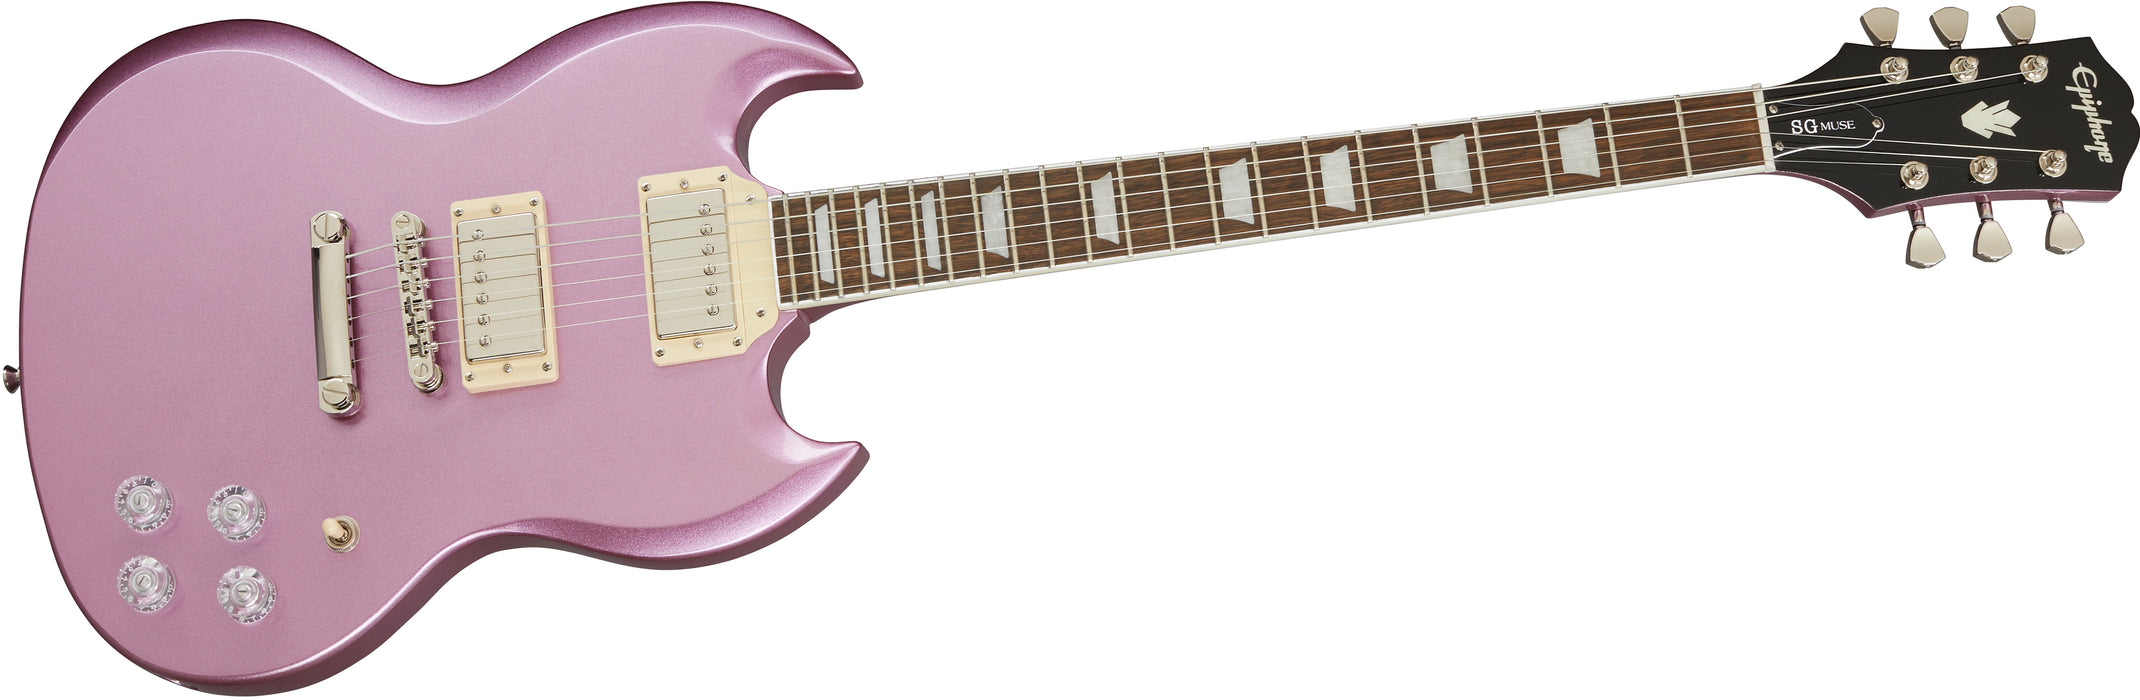 Epiphone SG Muse Electric Guitar - Purple Passion Metallic